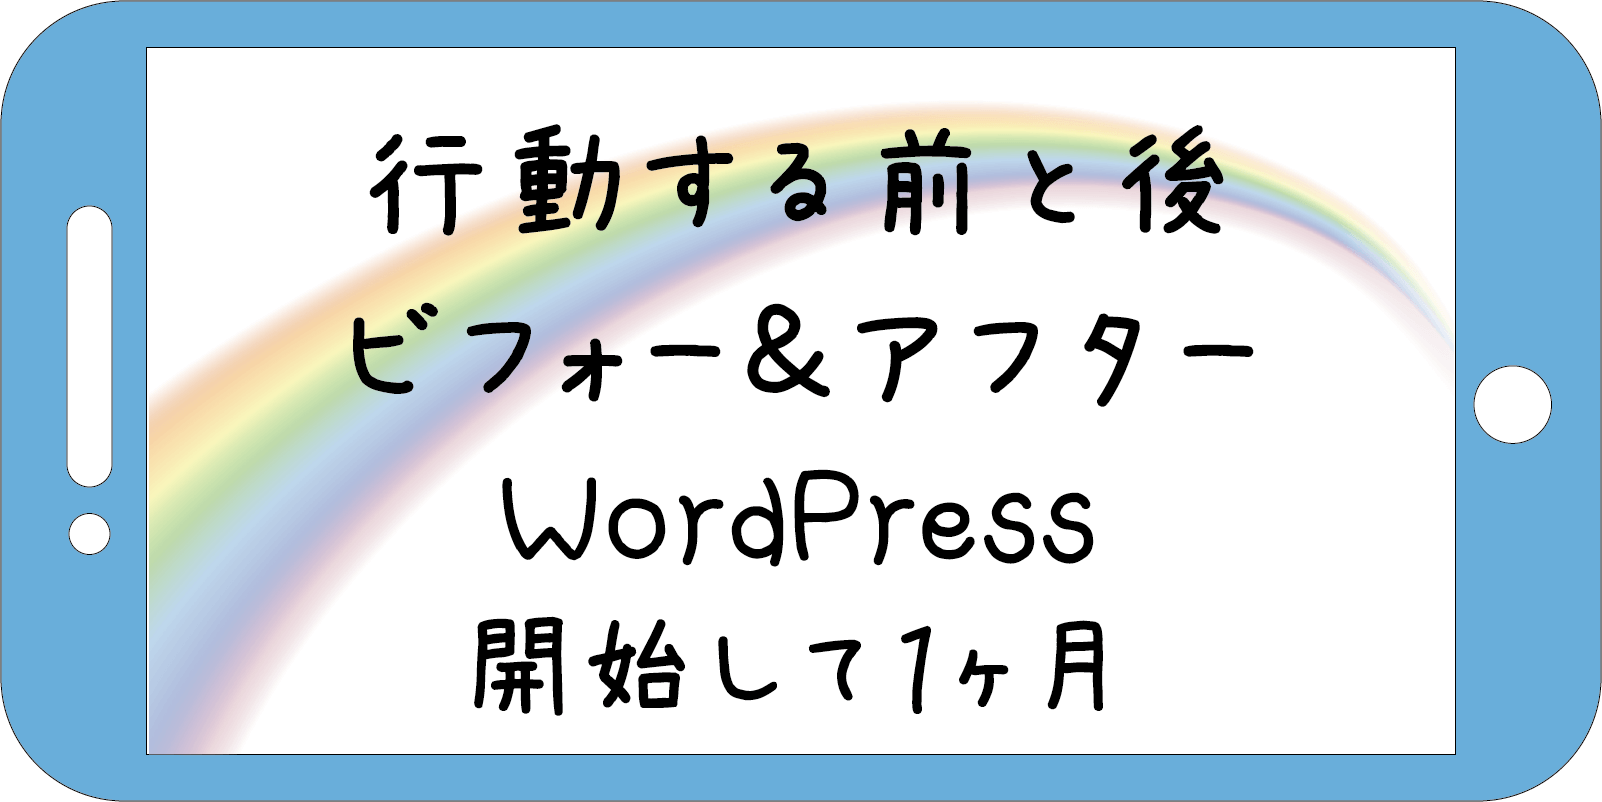 Wordpress開設して１ヶ月で思ったこと ぱそみブログ